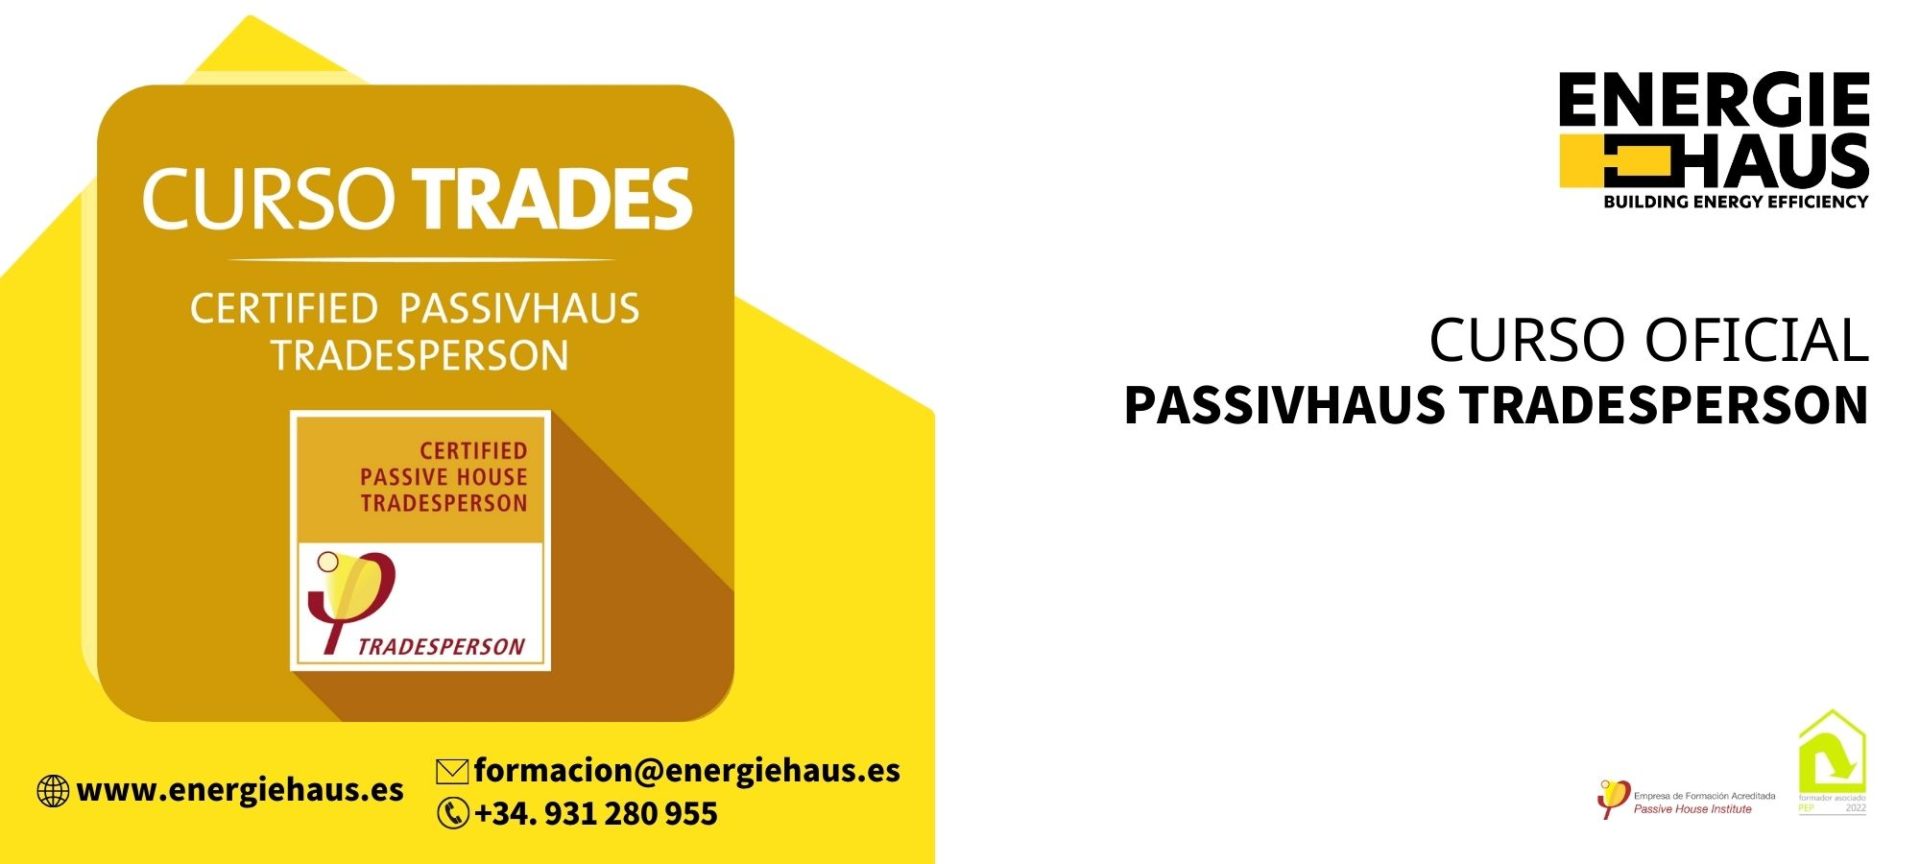 Curso oficial Certified Passivhaus Tradesperson. Streaming. ENERGIEHAUS